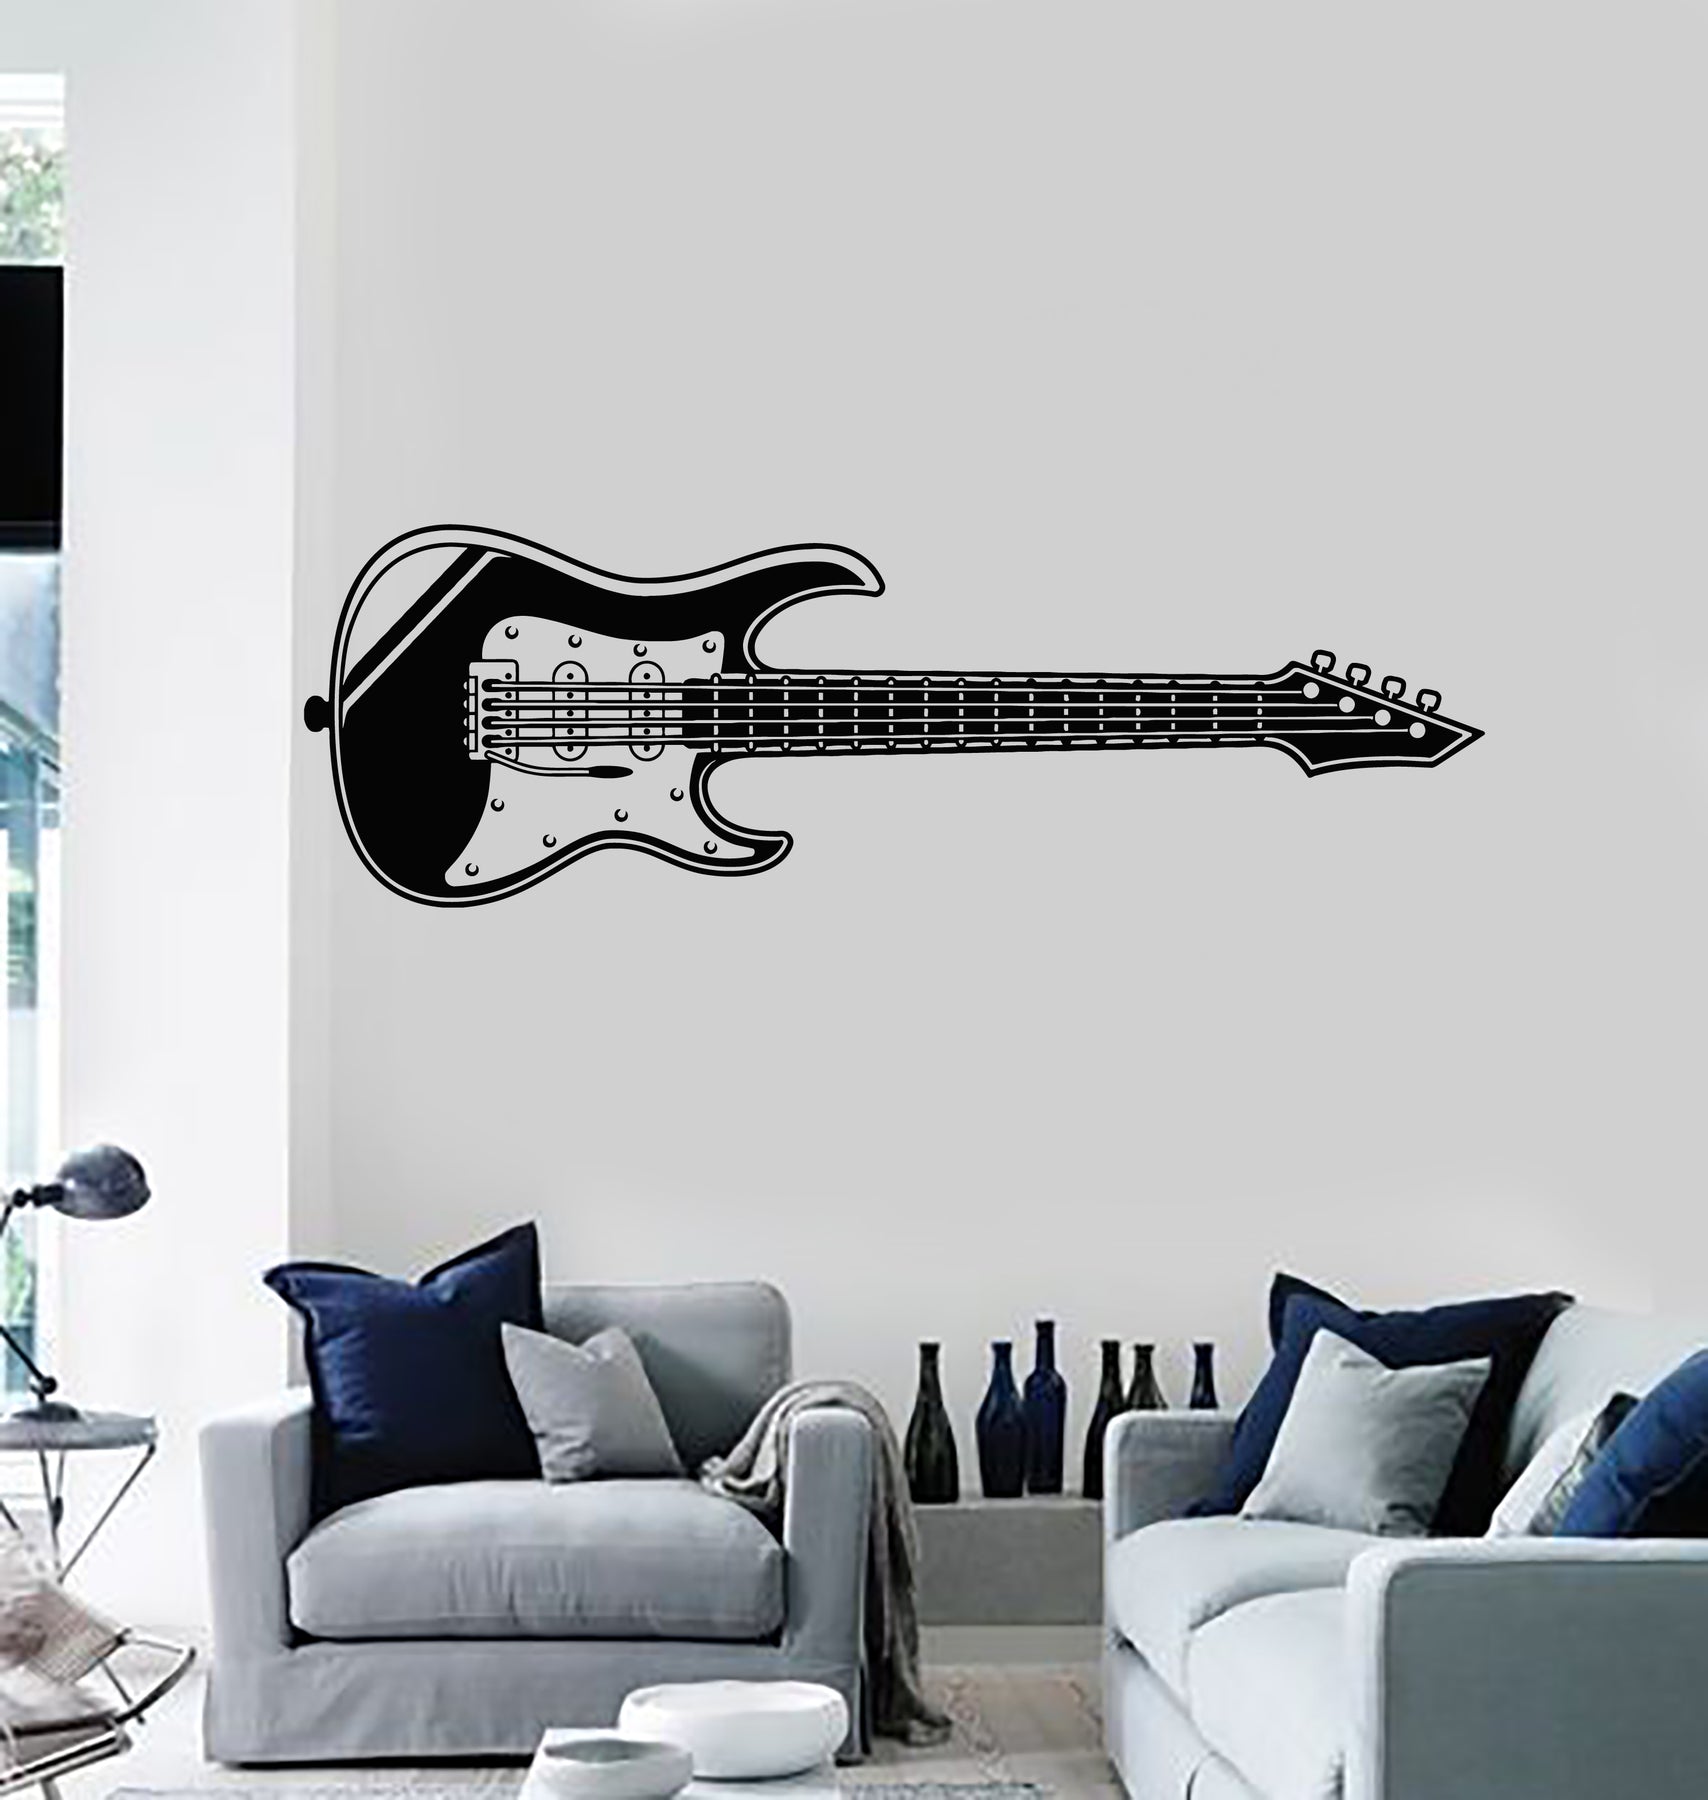 Wall Vinyl Music Rock Guitar Guaranteed Quality Decal Mural 